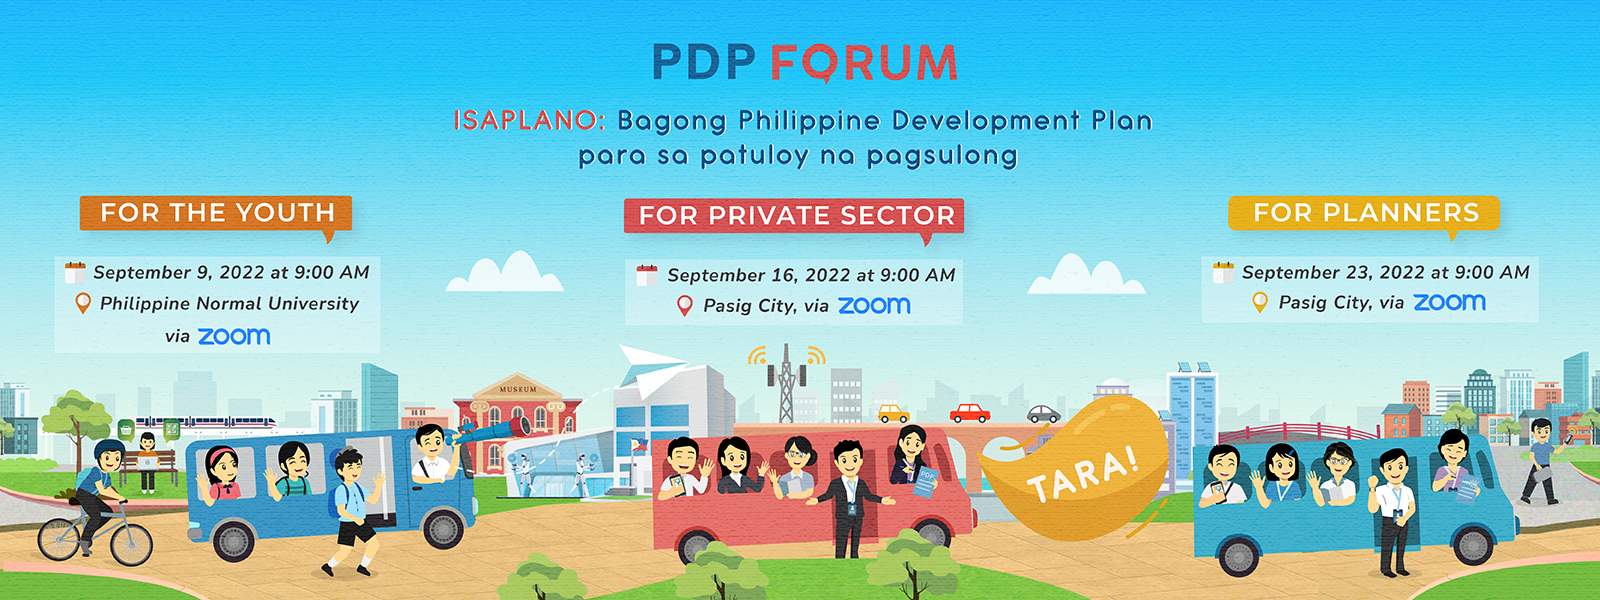 PDP Forum_Website Banner